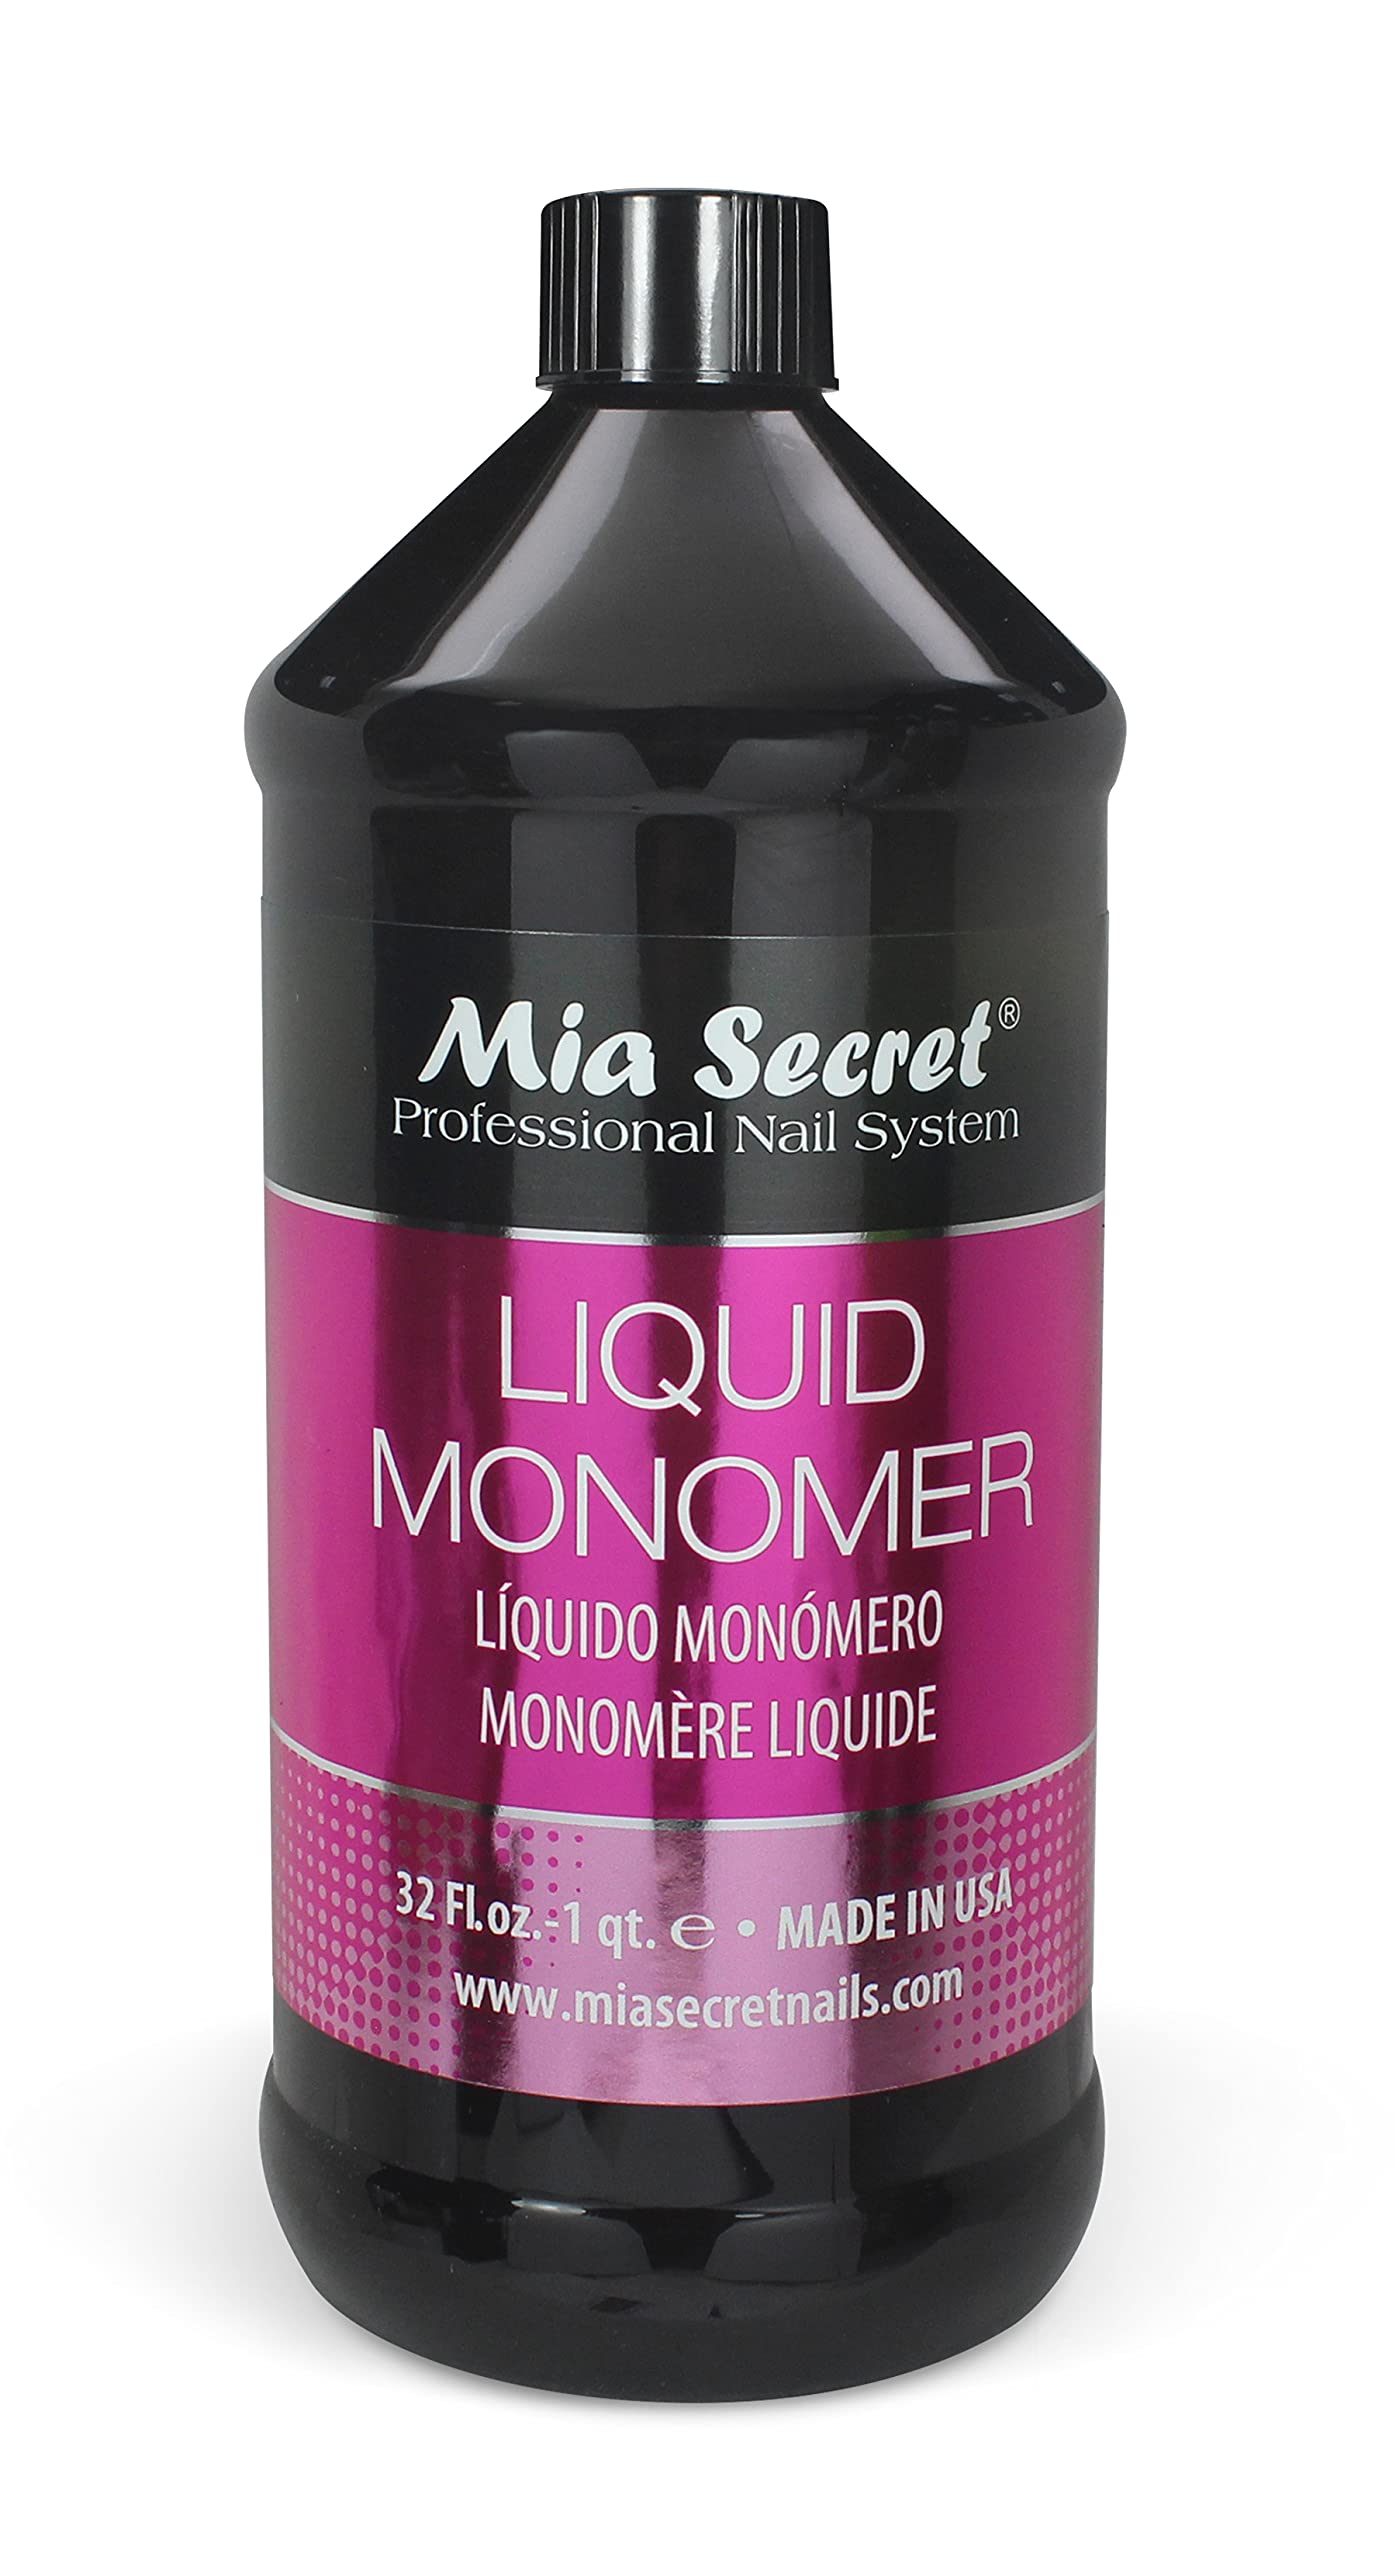 Mia Secret 32 oz  Liquid Monomer - Professional Acrylic Nail Liquid for Acrylic Powder - EMA monomer - Nail Monomer liquid - ema monomer acrylic nail liquid